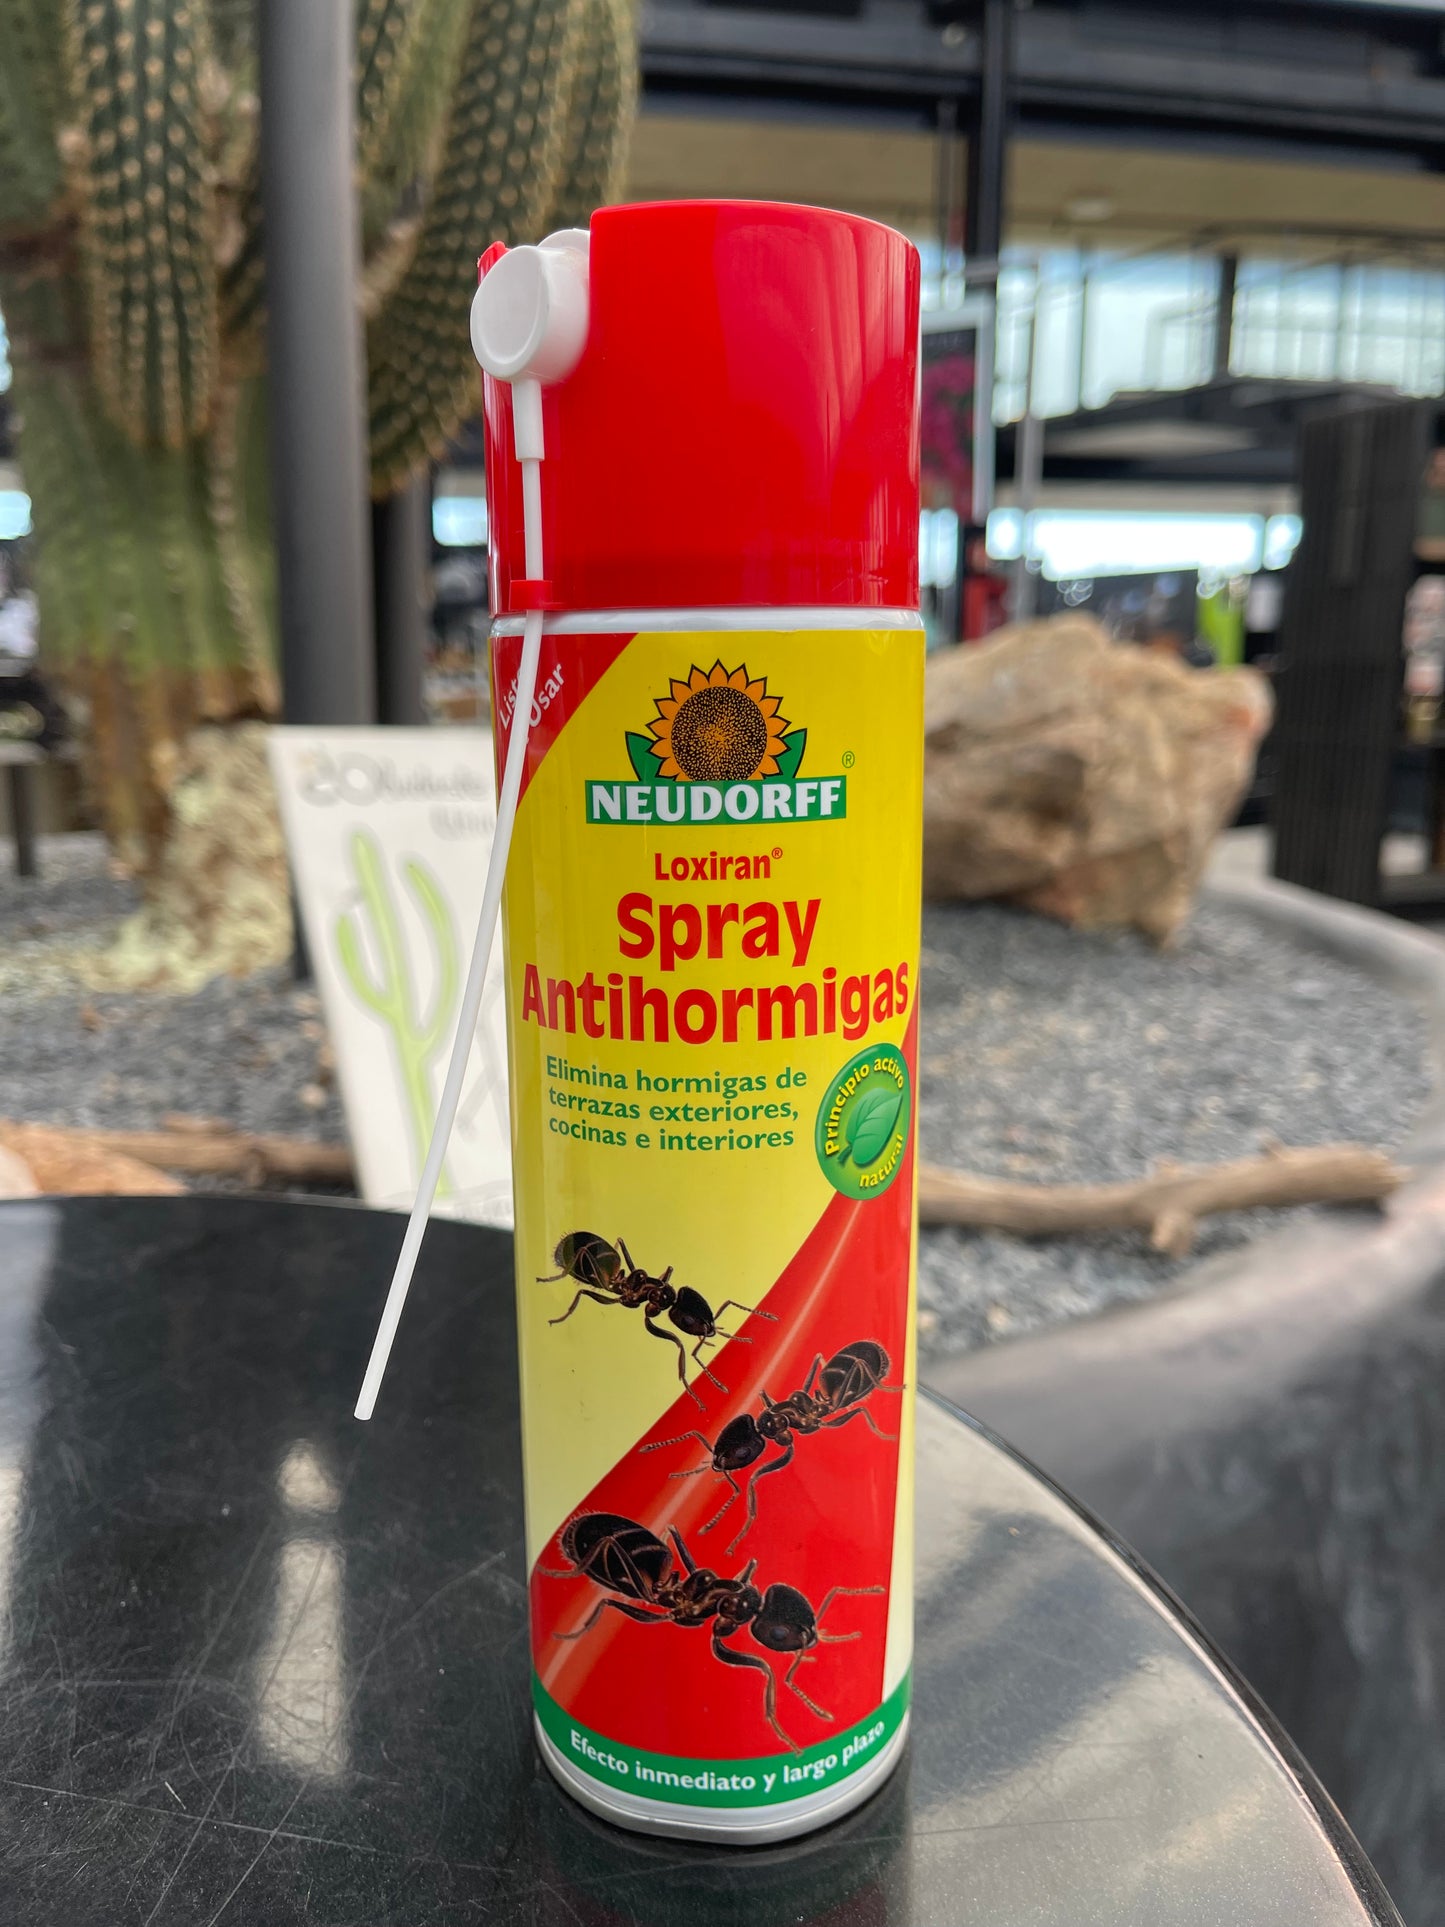 Loxiran Neudorff Ant Spray